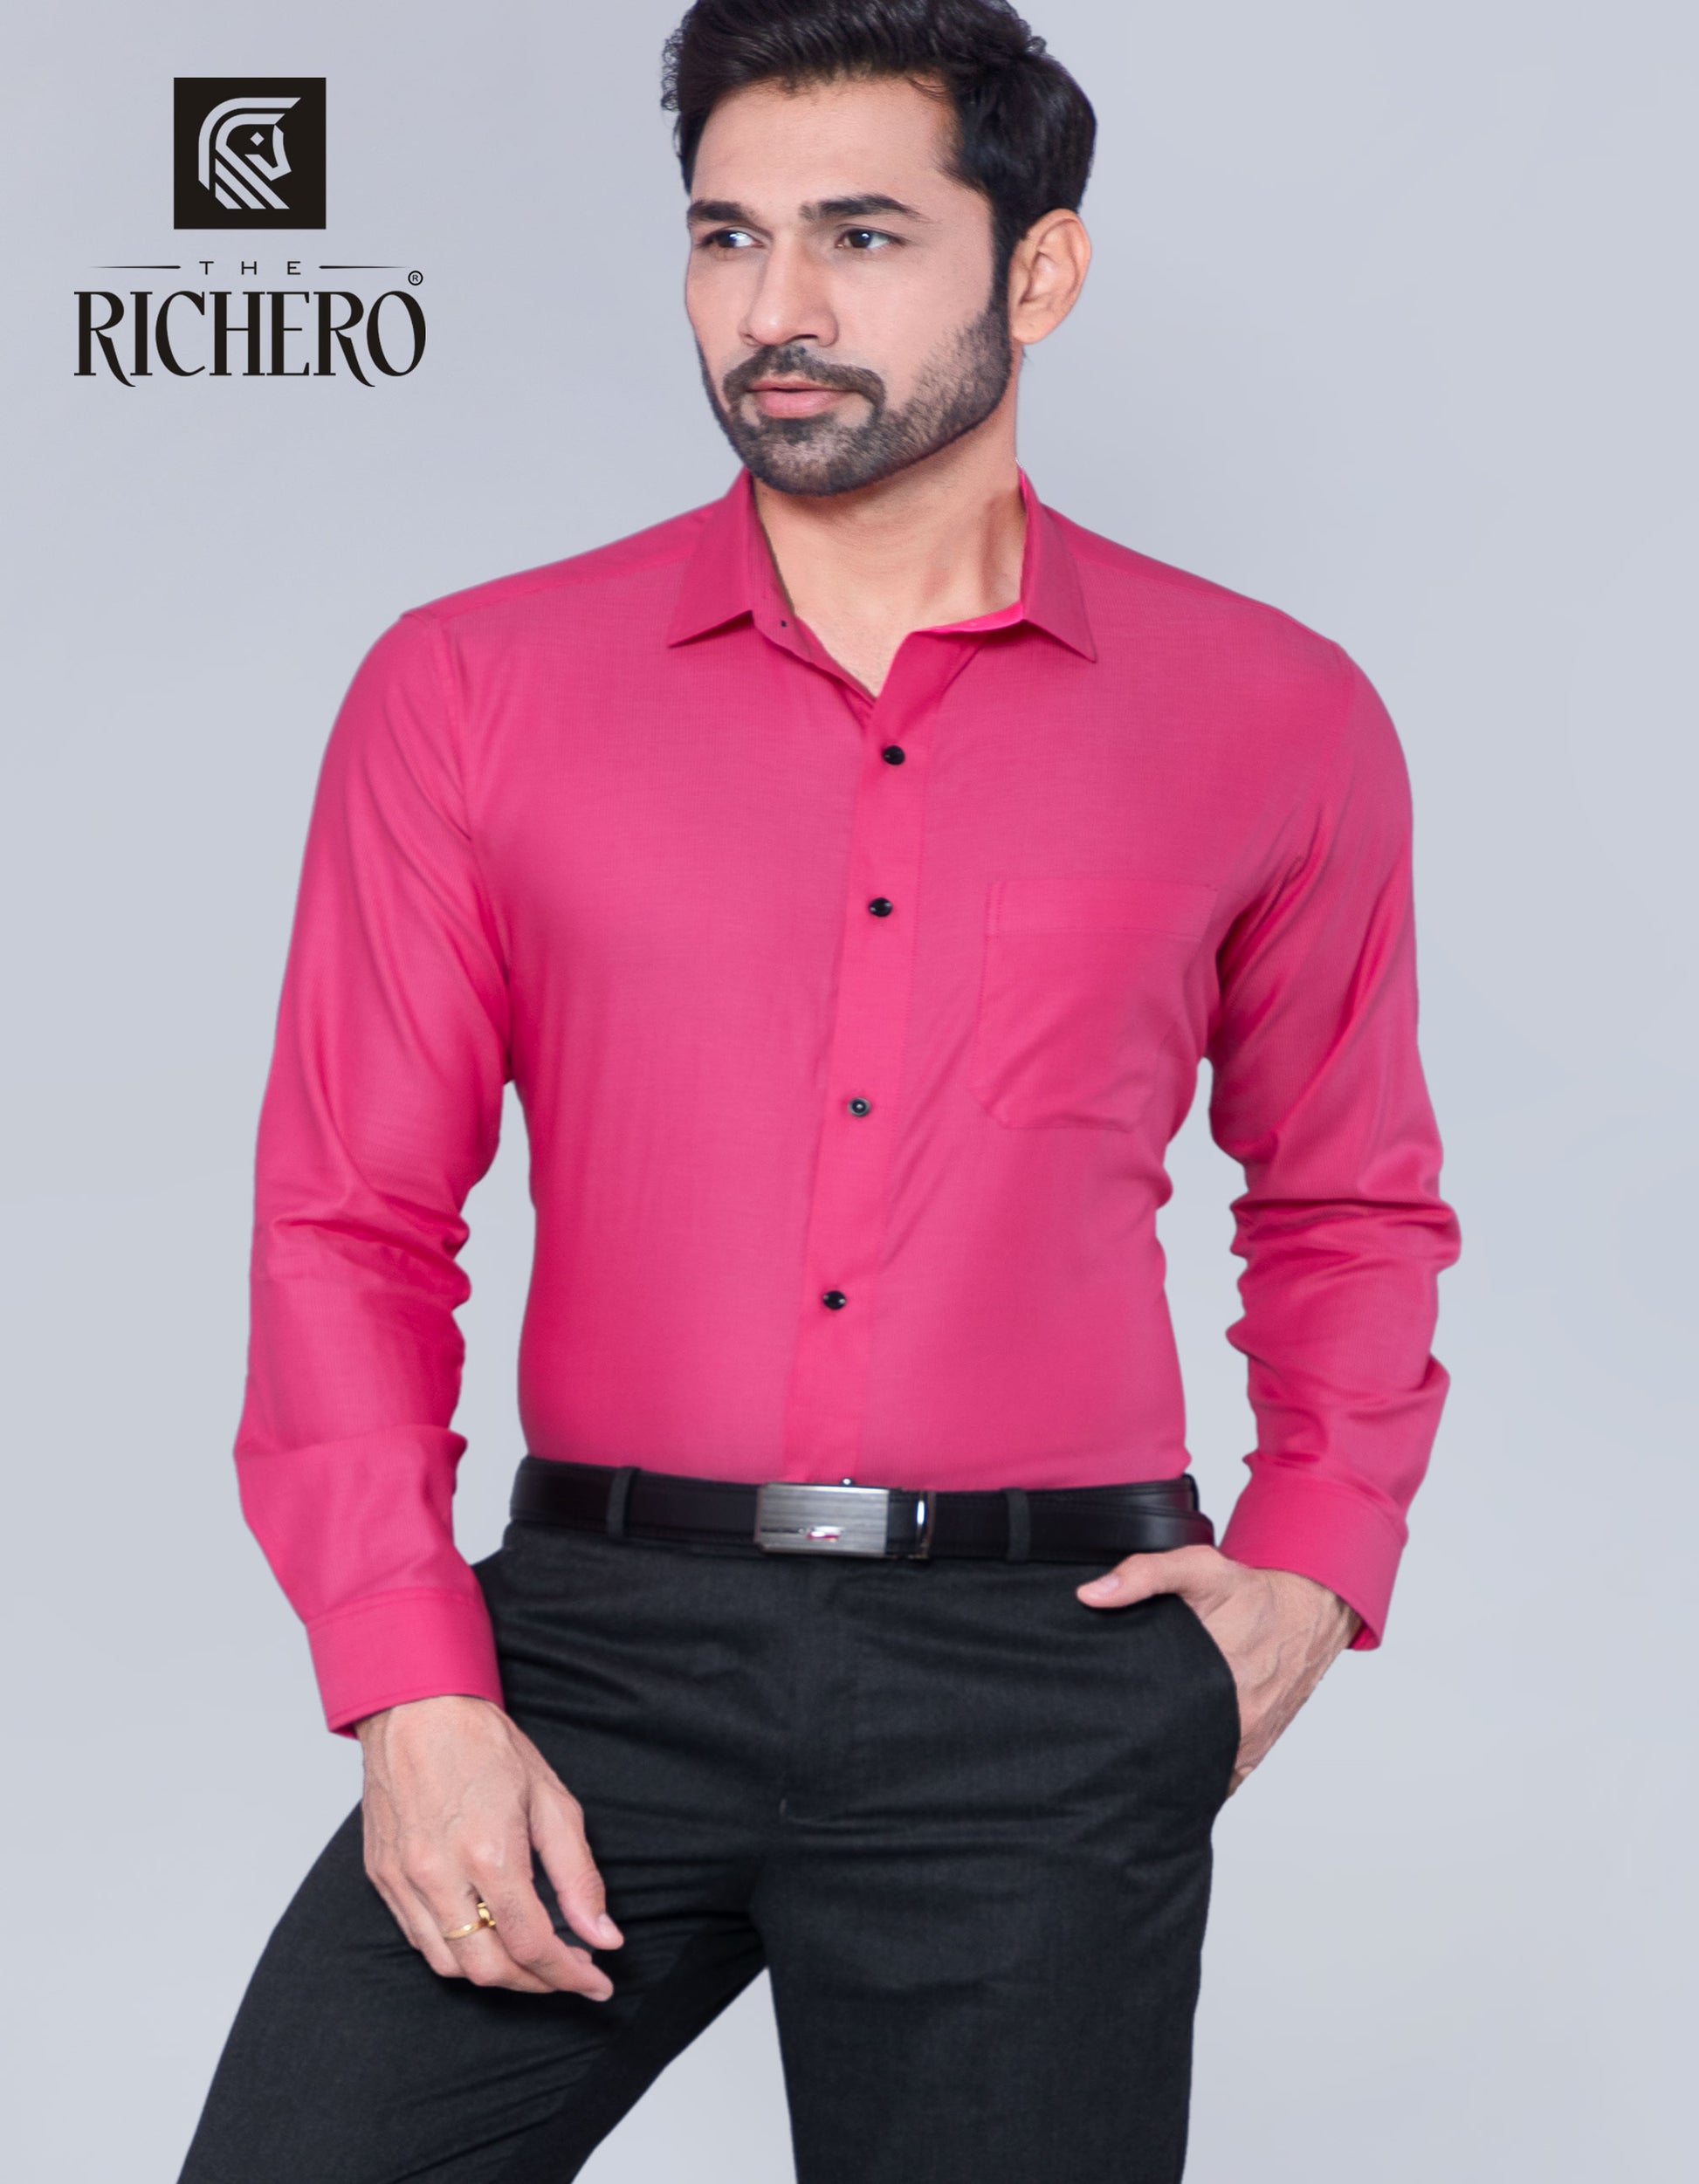 Sizzling pink plain cotton office shirt